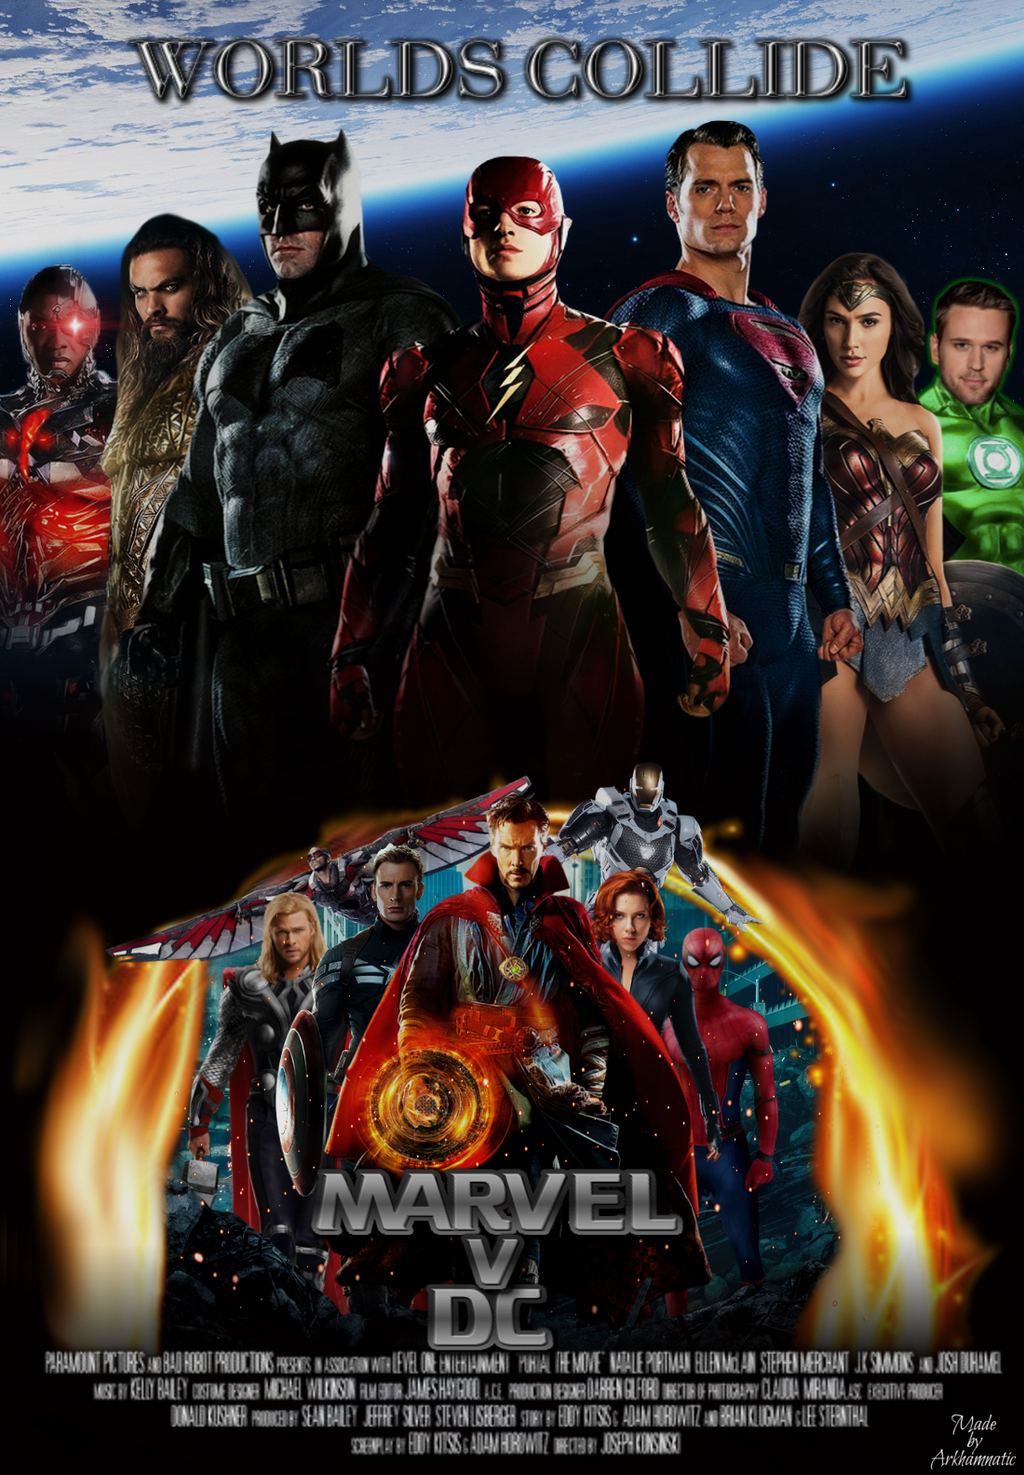 Marvel v DC movie poster by ArkhamNatic on DeviantArt